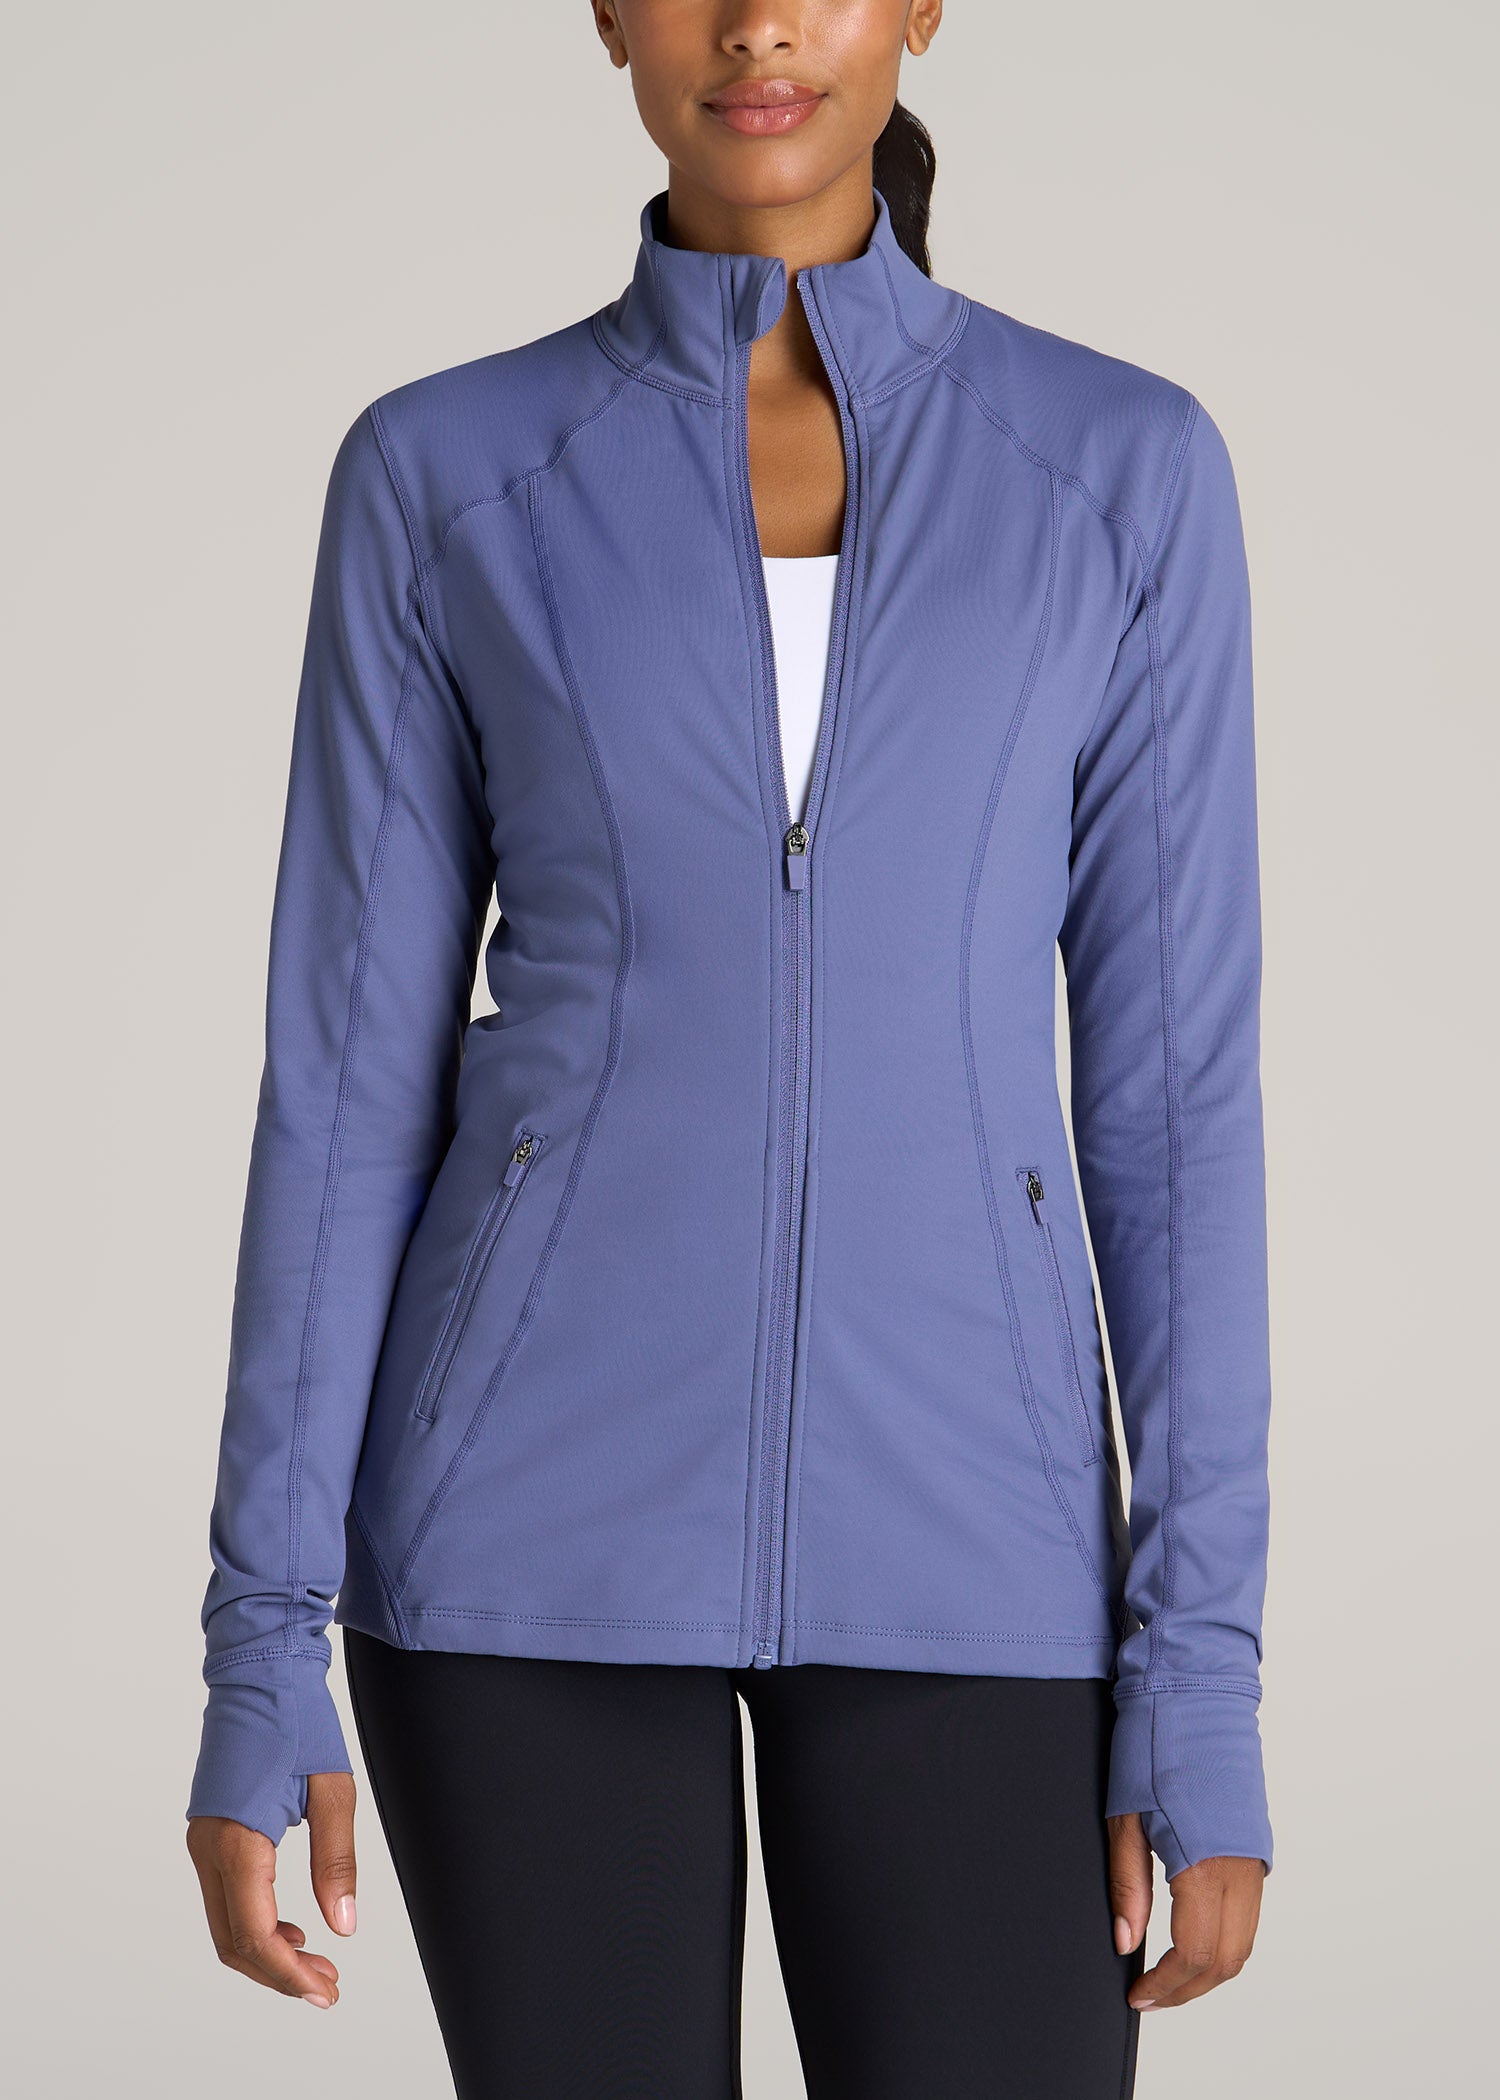 Women's Athletic Zip-Up Jacket in Marlin Blue S / Tall / Marlin Blue